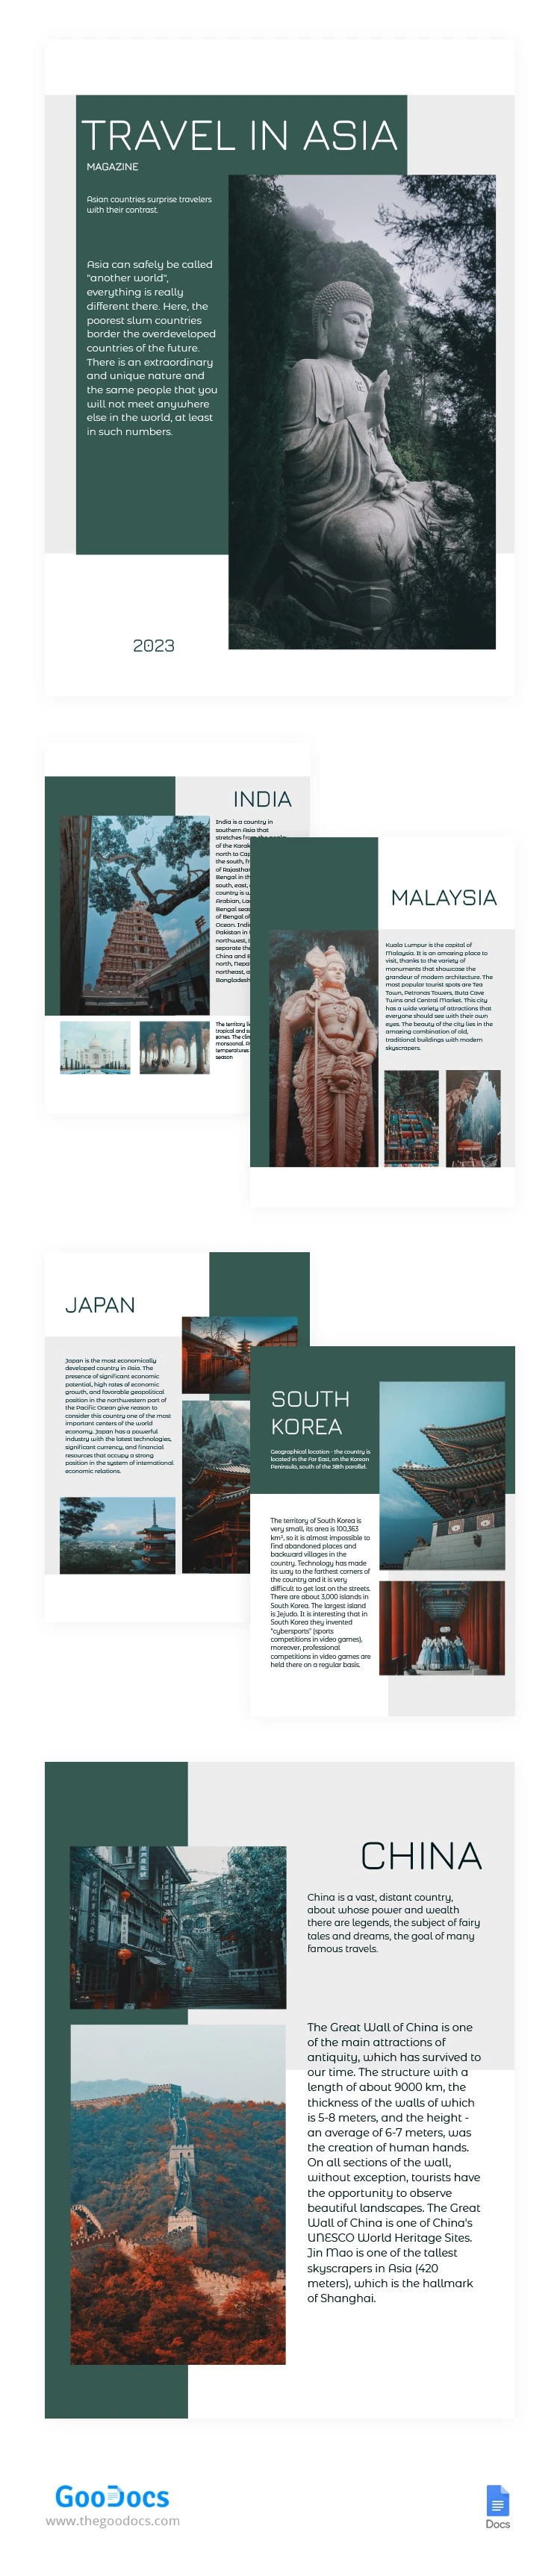 Voyage en Asie Magazine - free Google Docs Template - 10064796